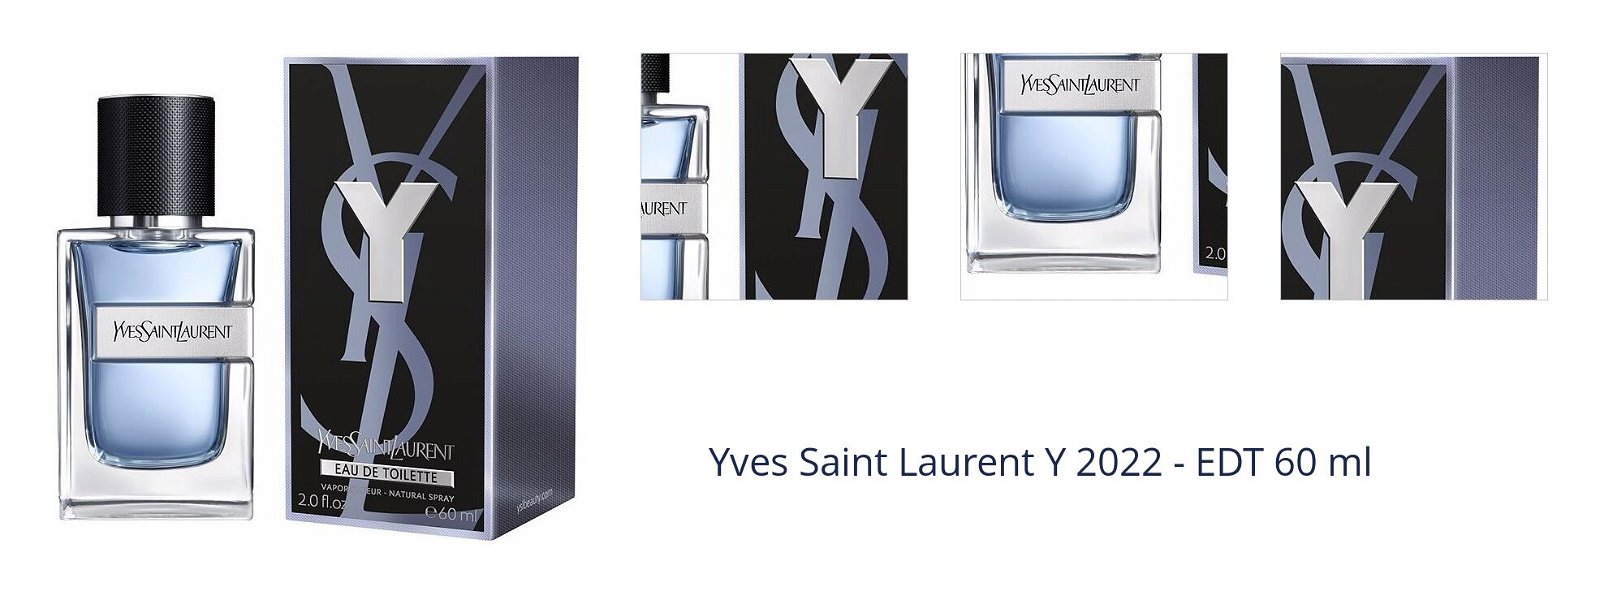 Yves Saint Laurent Y 2022 - EDT 60 ml 1